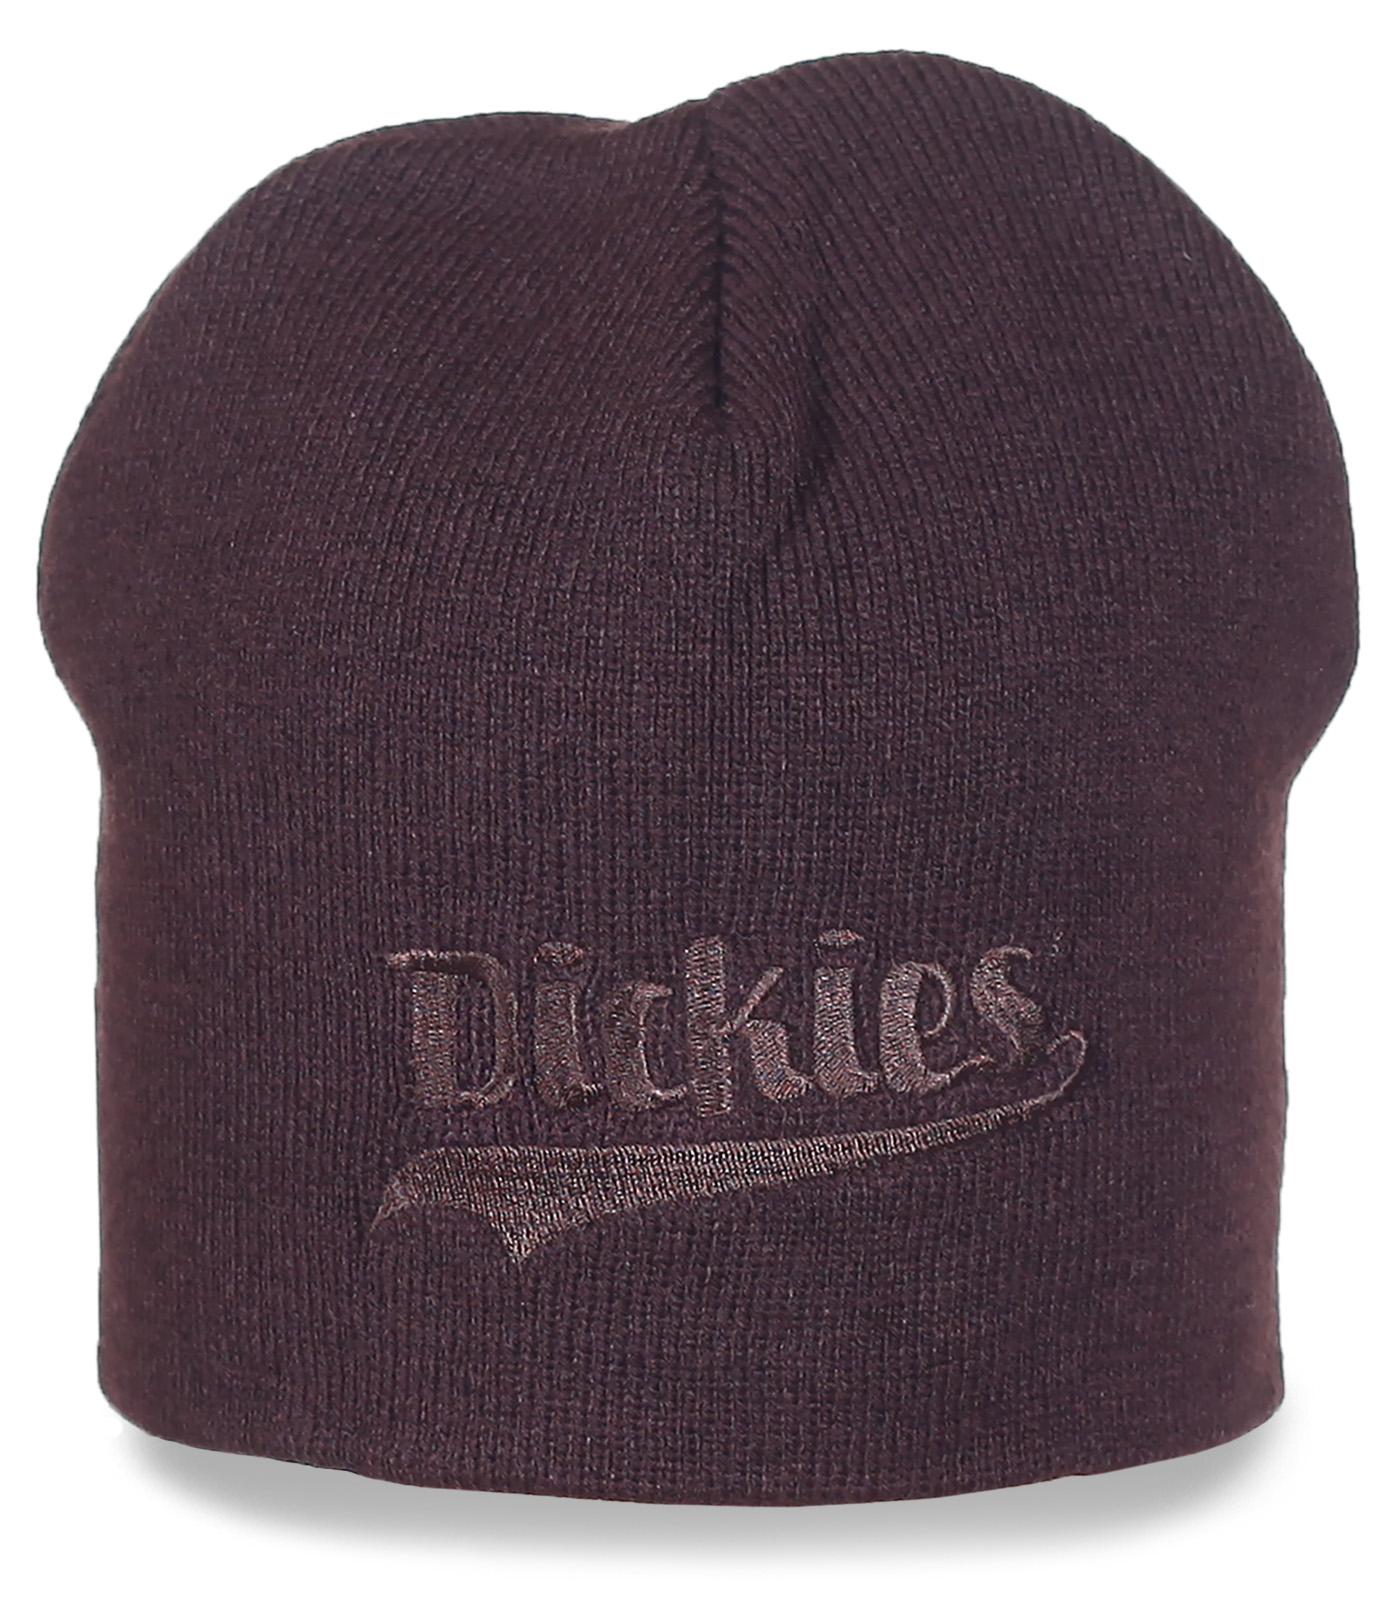 Заказать шапки Dickies недорого